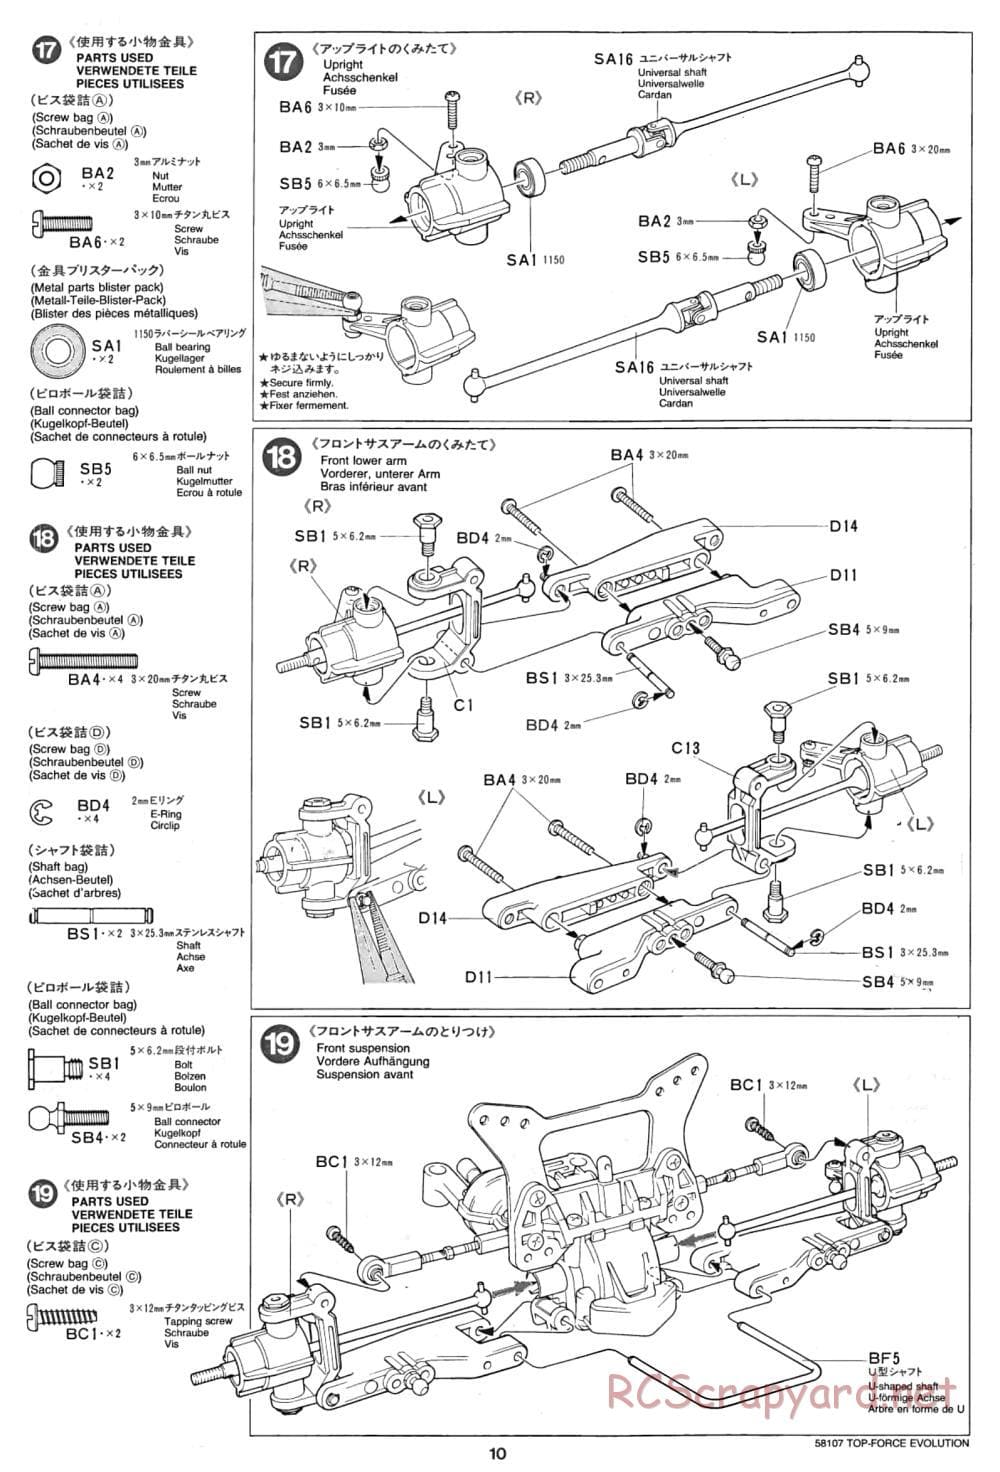 Tamiya - Top Force Evolution Chassis - Manual - Page 10